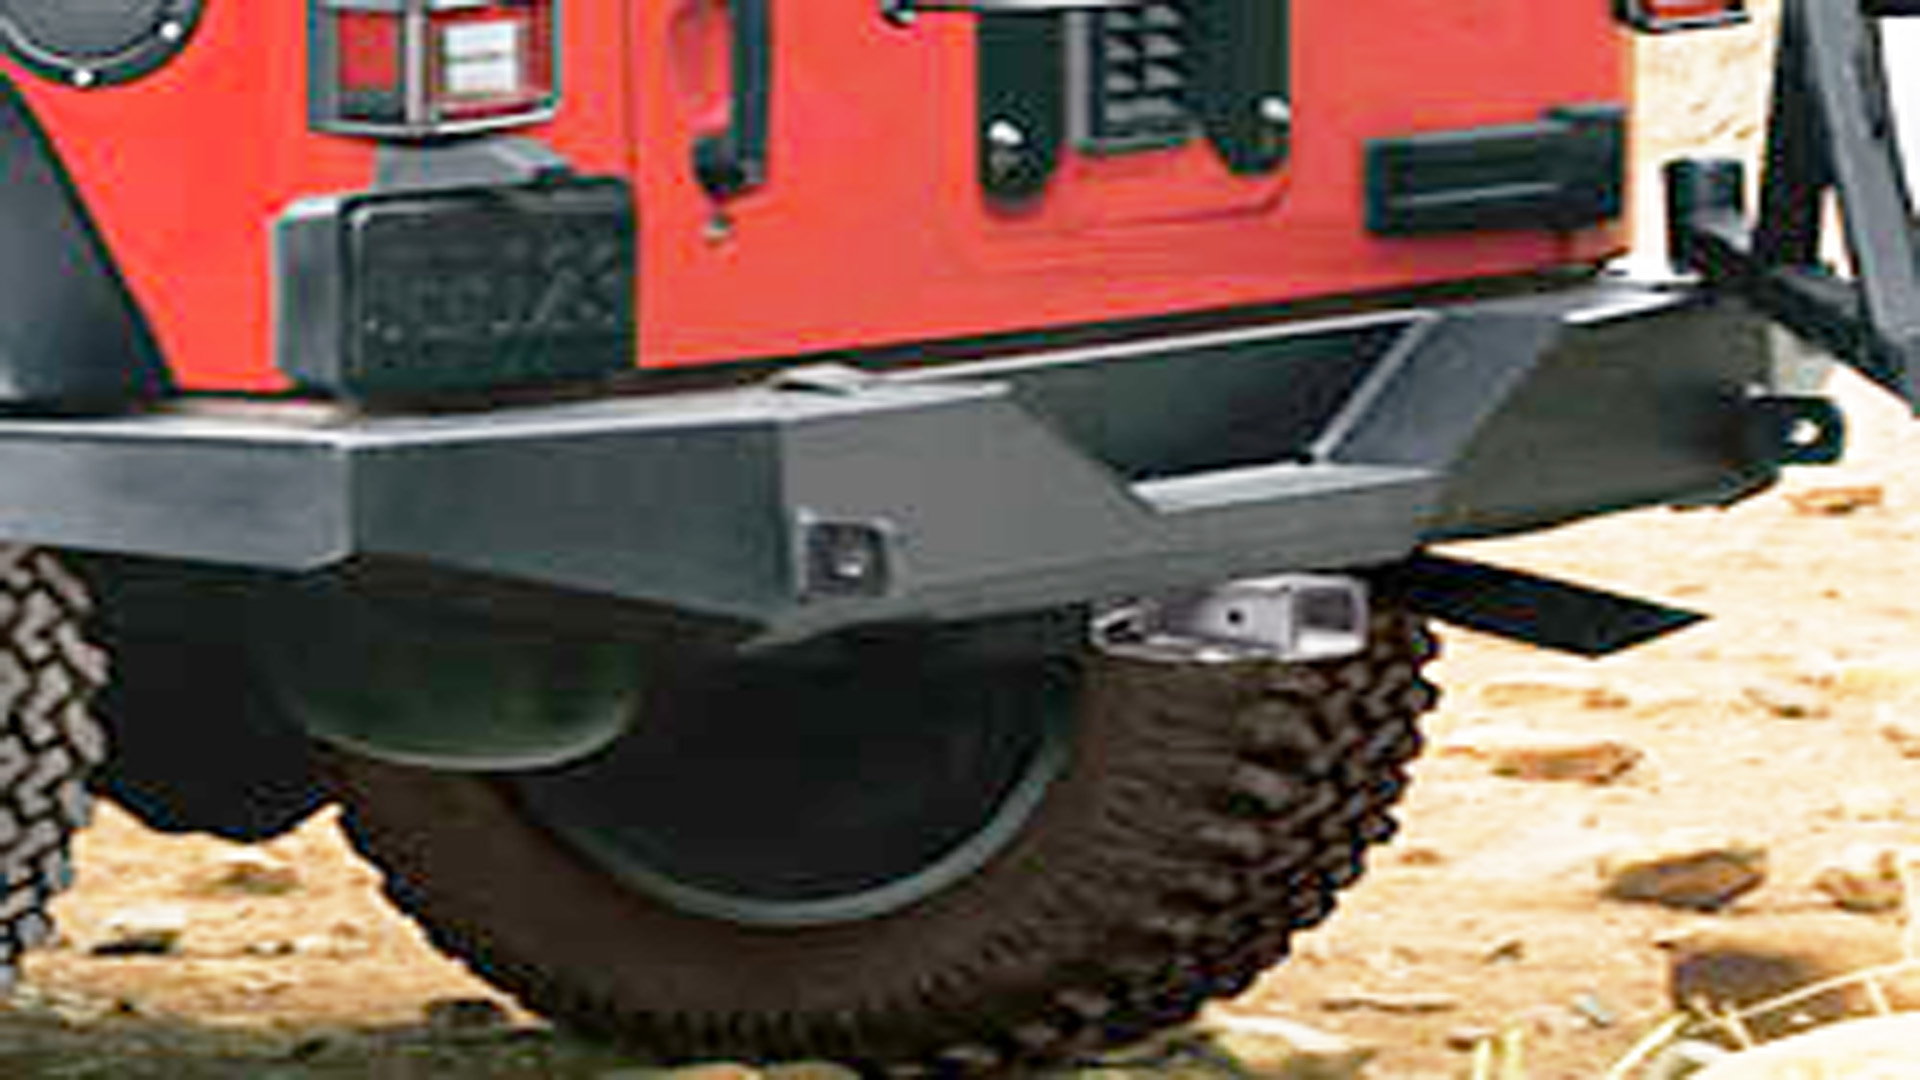 Jeep Wrangler JK: How to Install Tow Hitch | Jk-forum